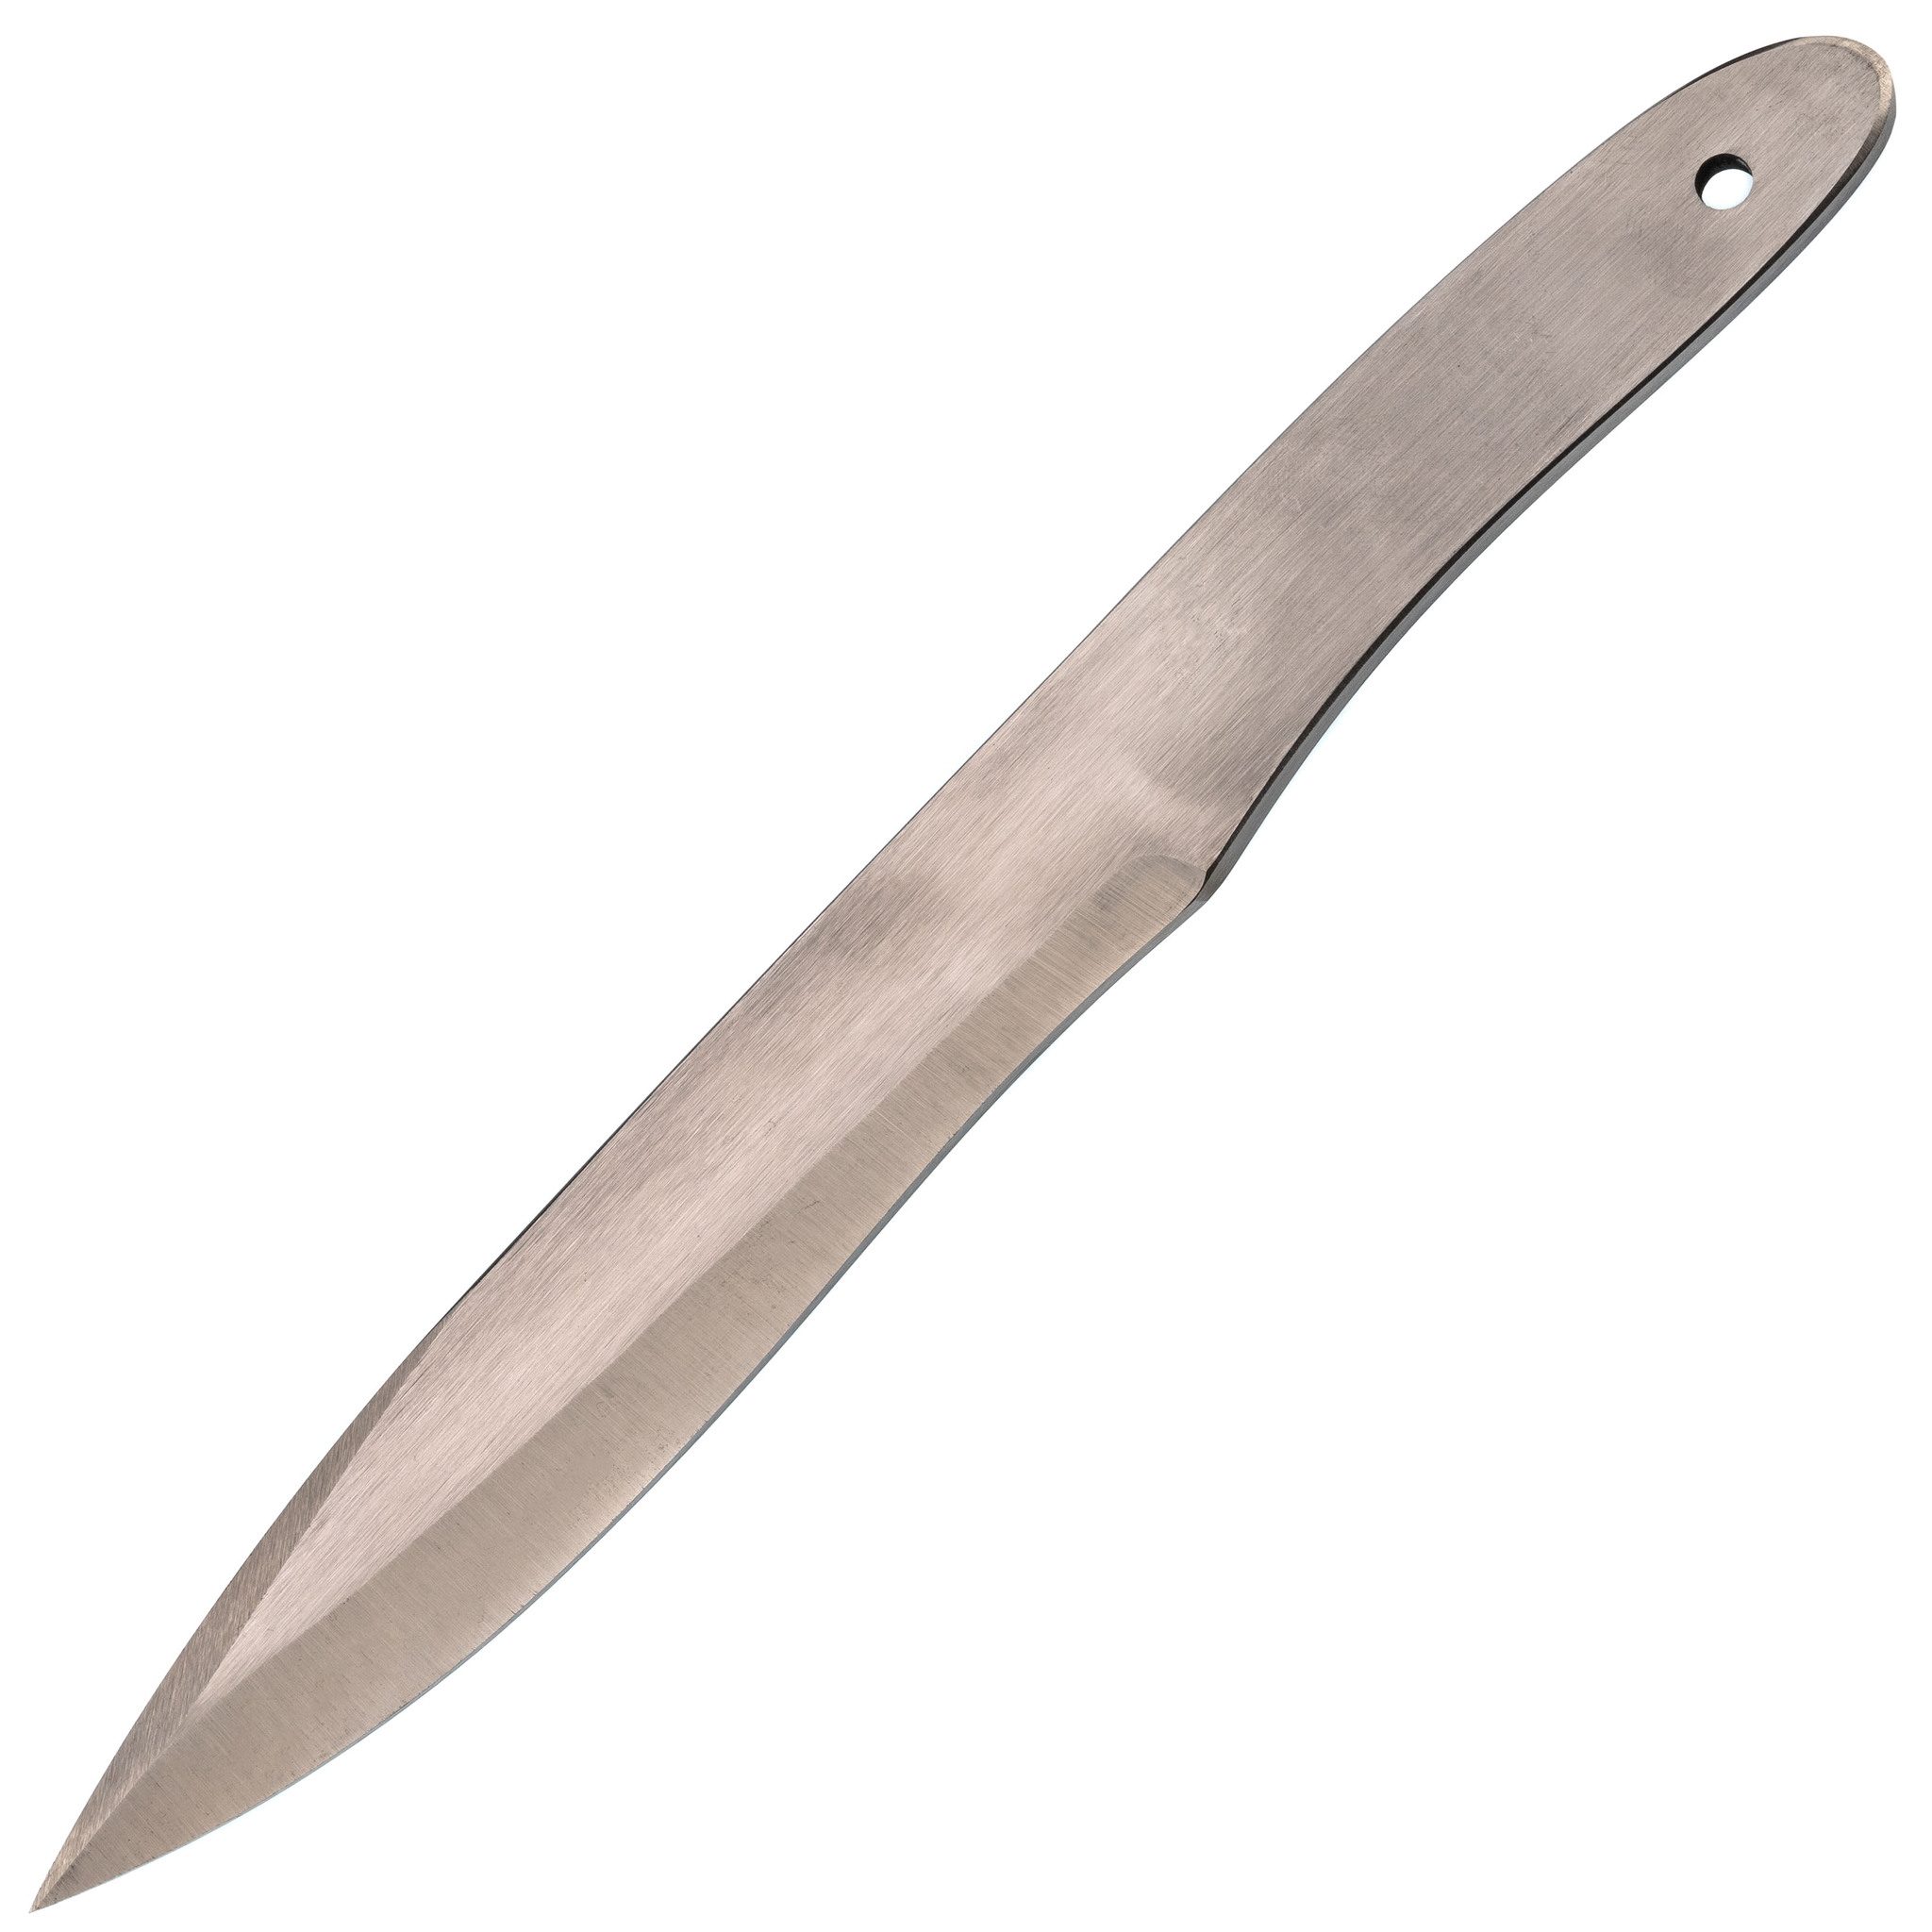 Спортивный нож  2, сталь 65Г, kk_vimpel2 по цене 1490.0 руб .